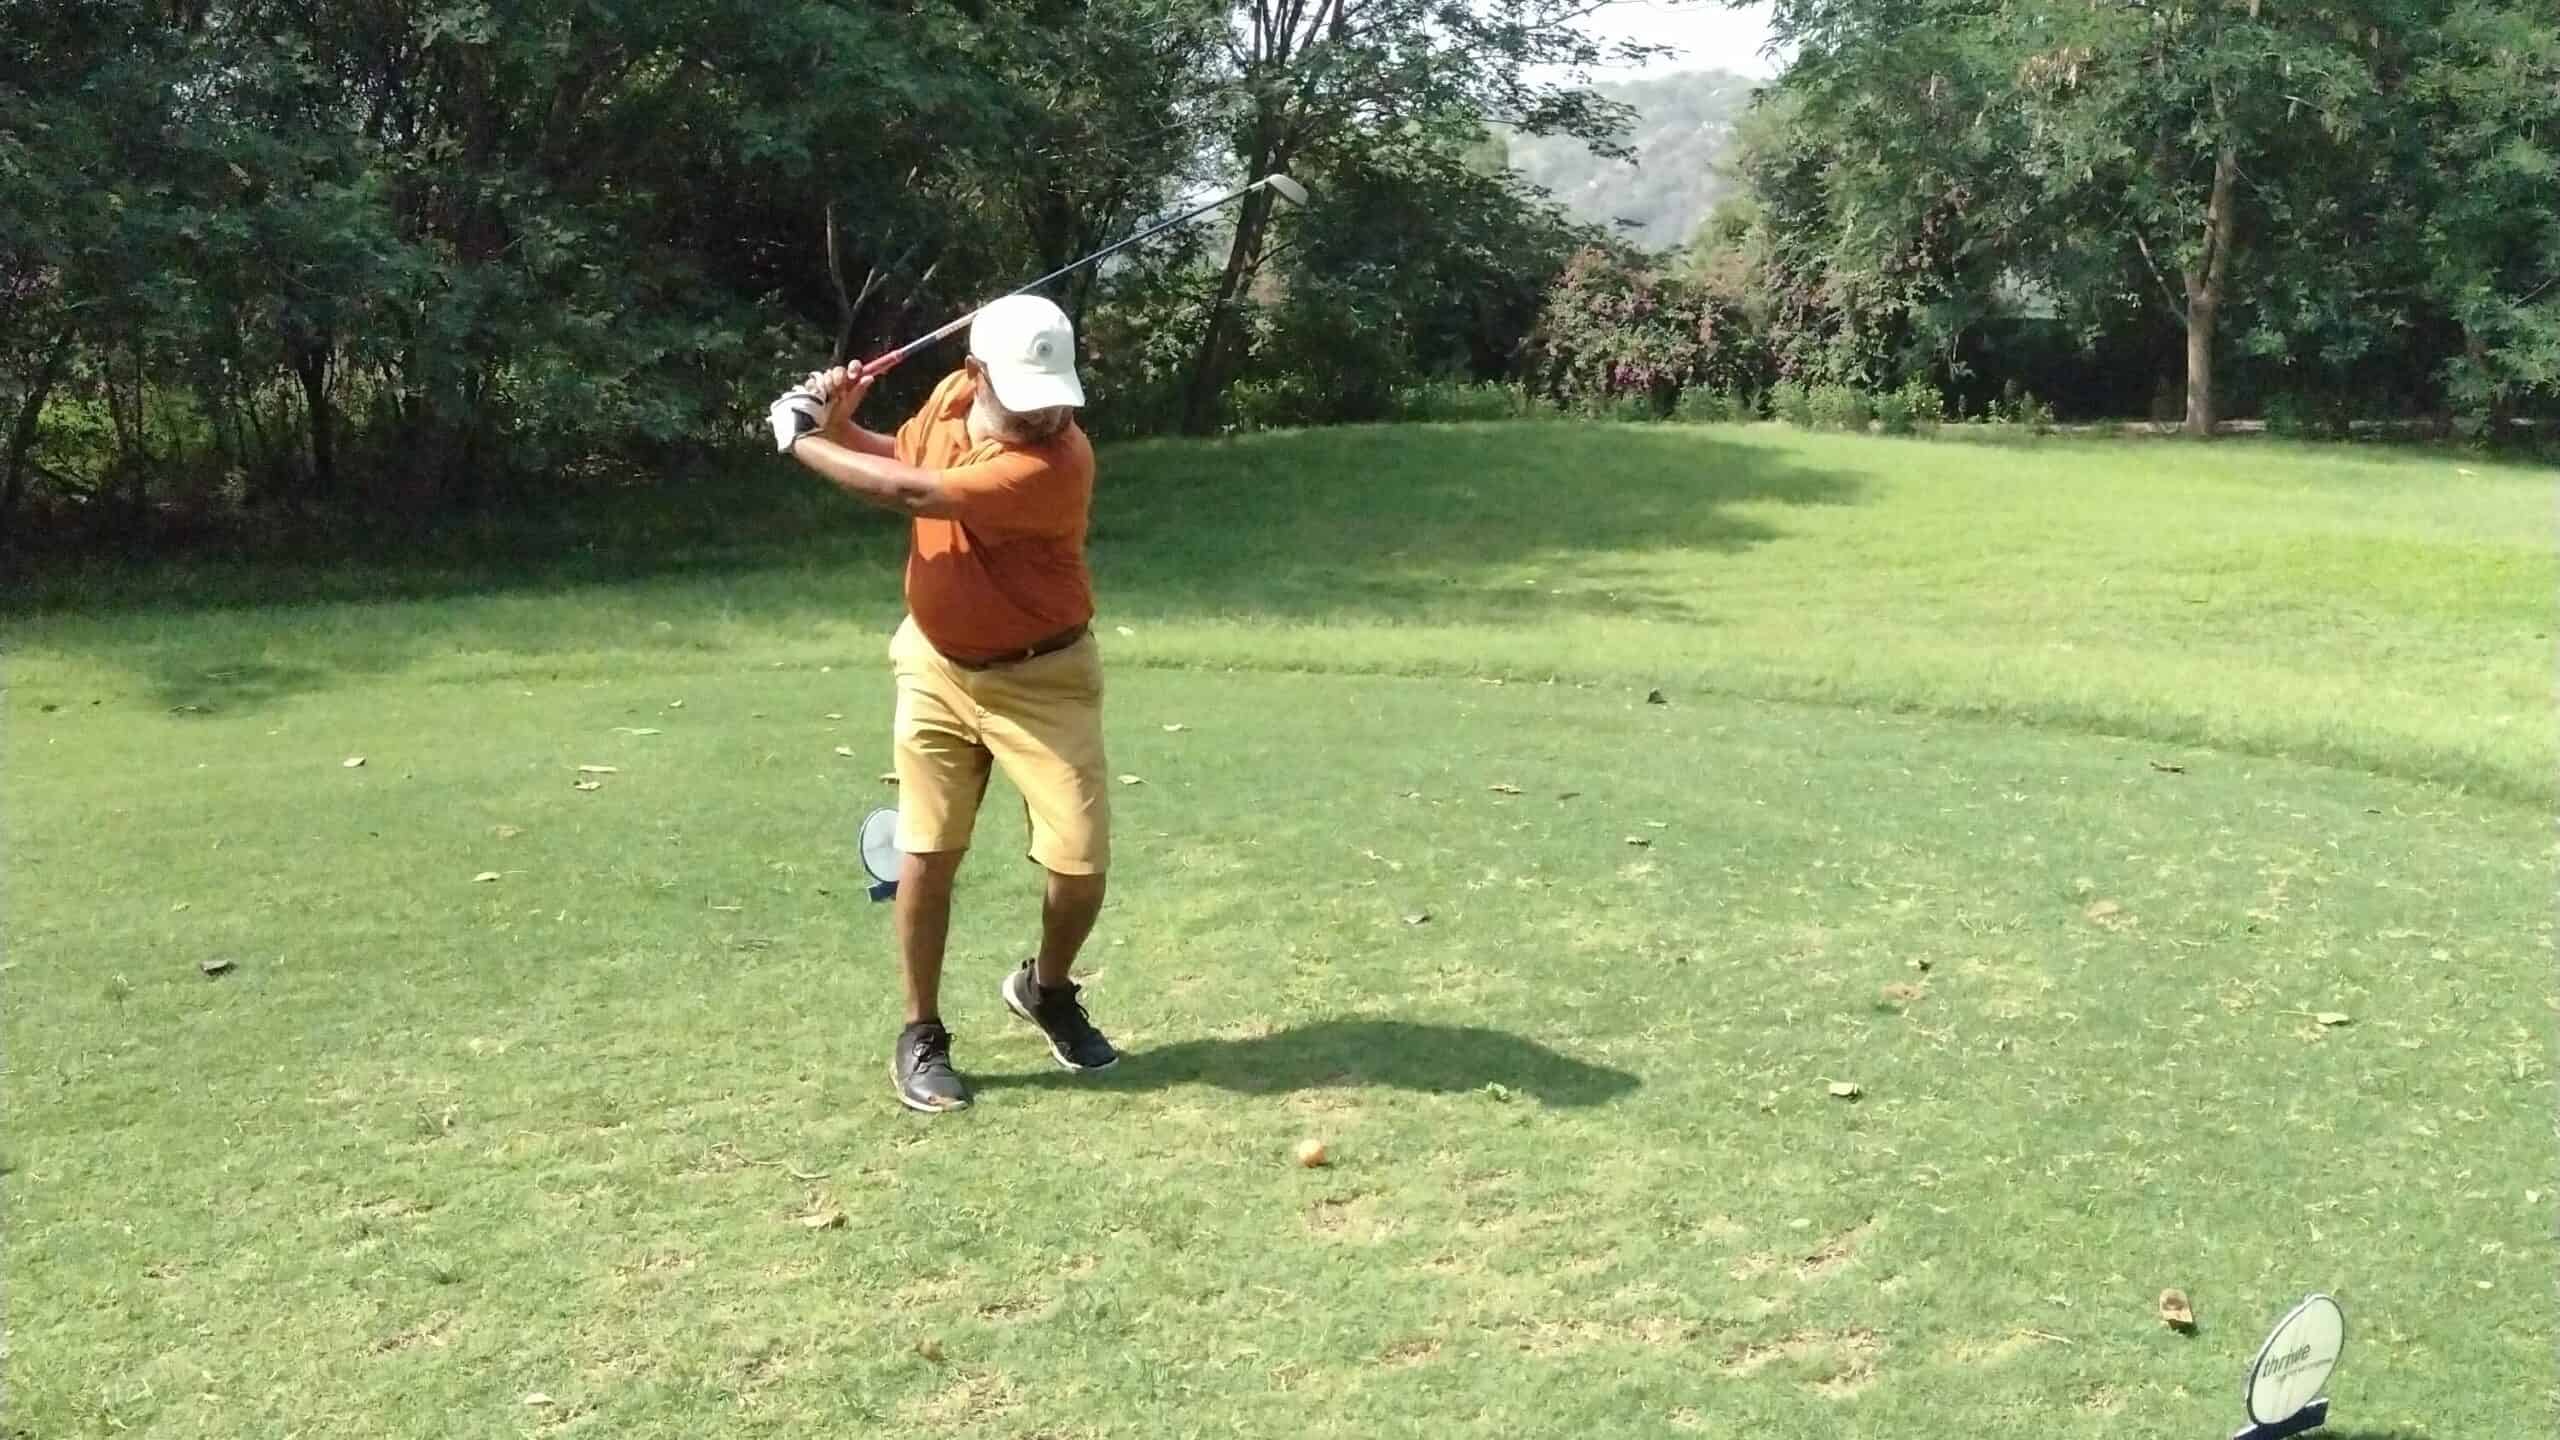 Ankur hitting his Mizuno golf club off the tee box